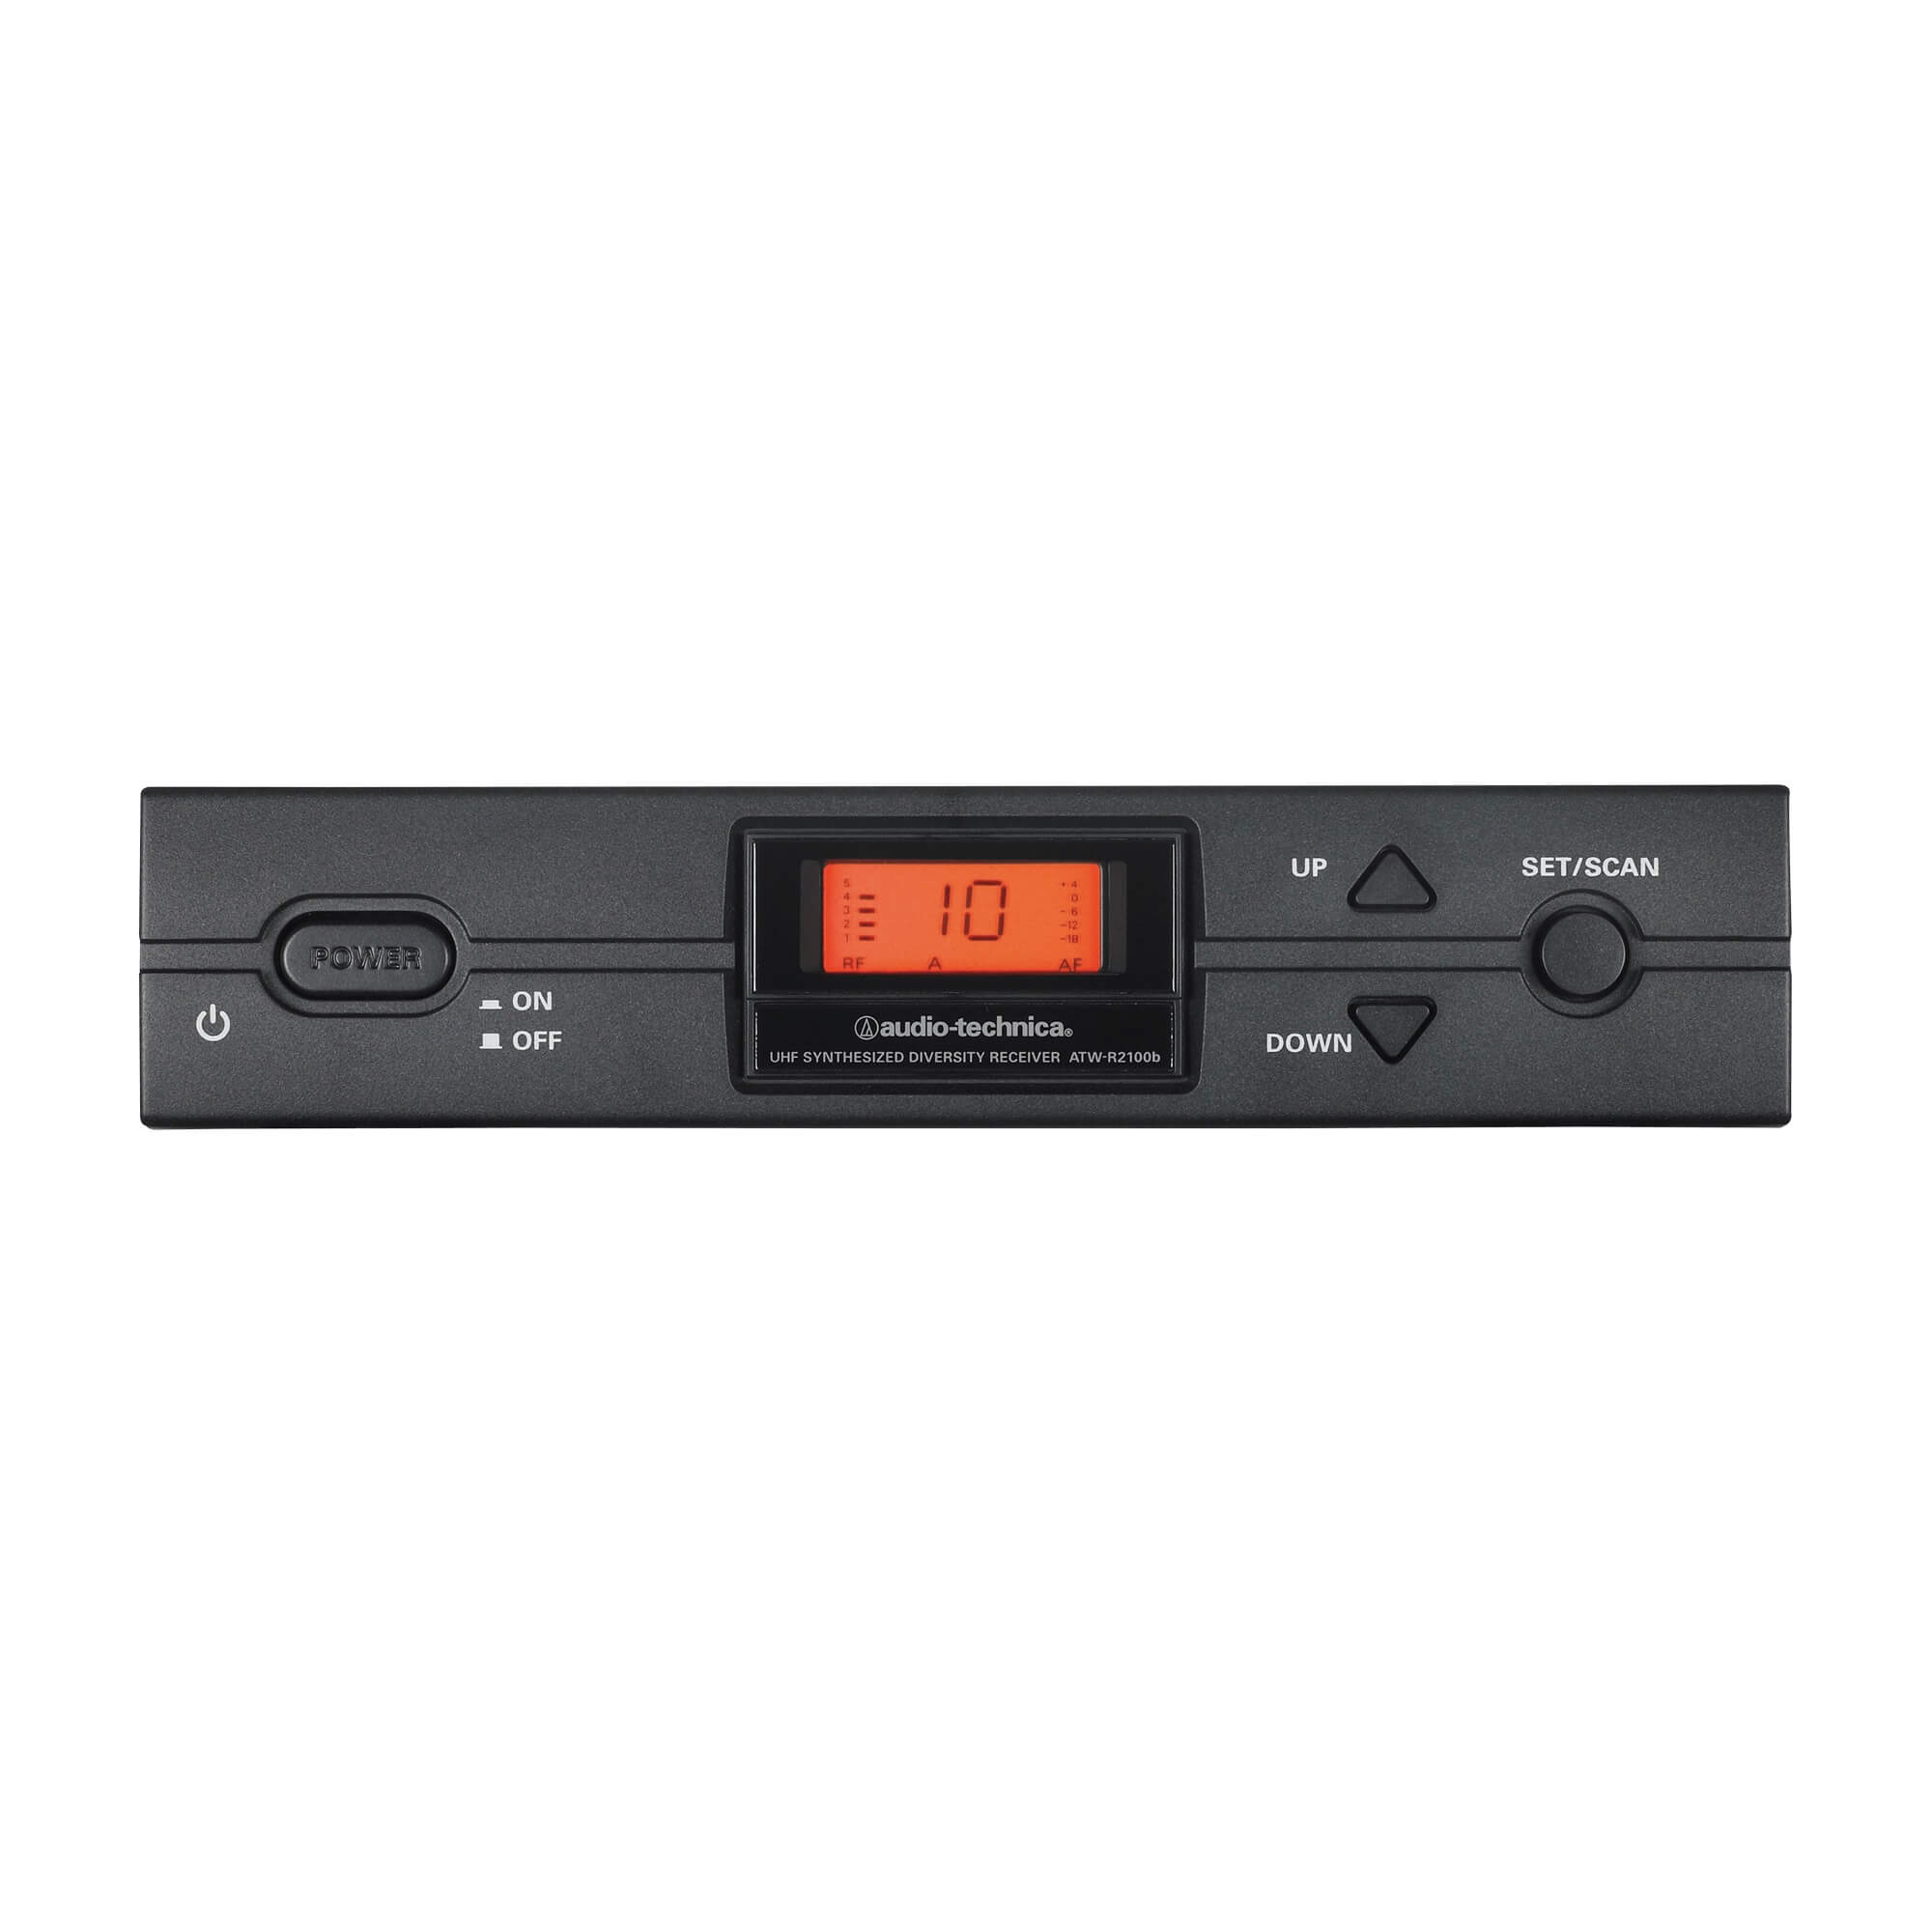 Audio-Technica ATW-R2100b receiver, front